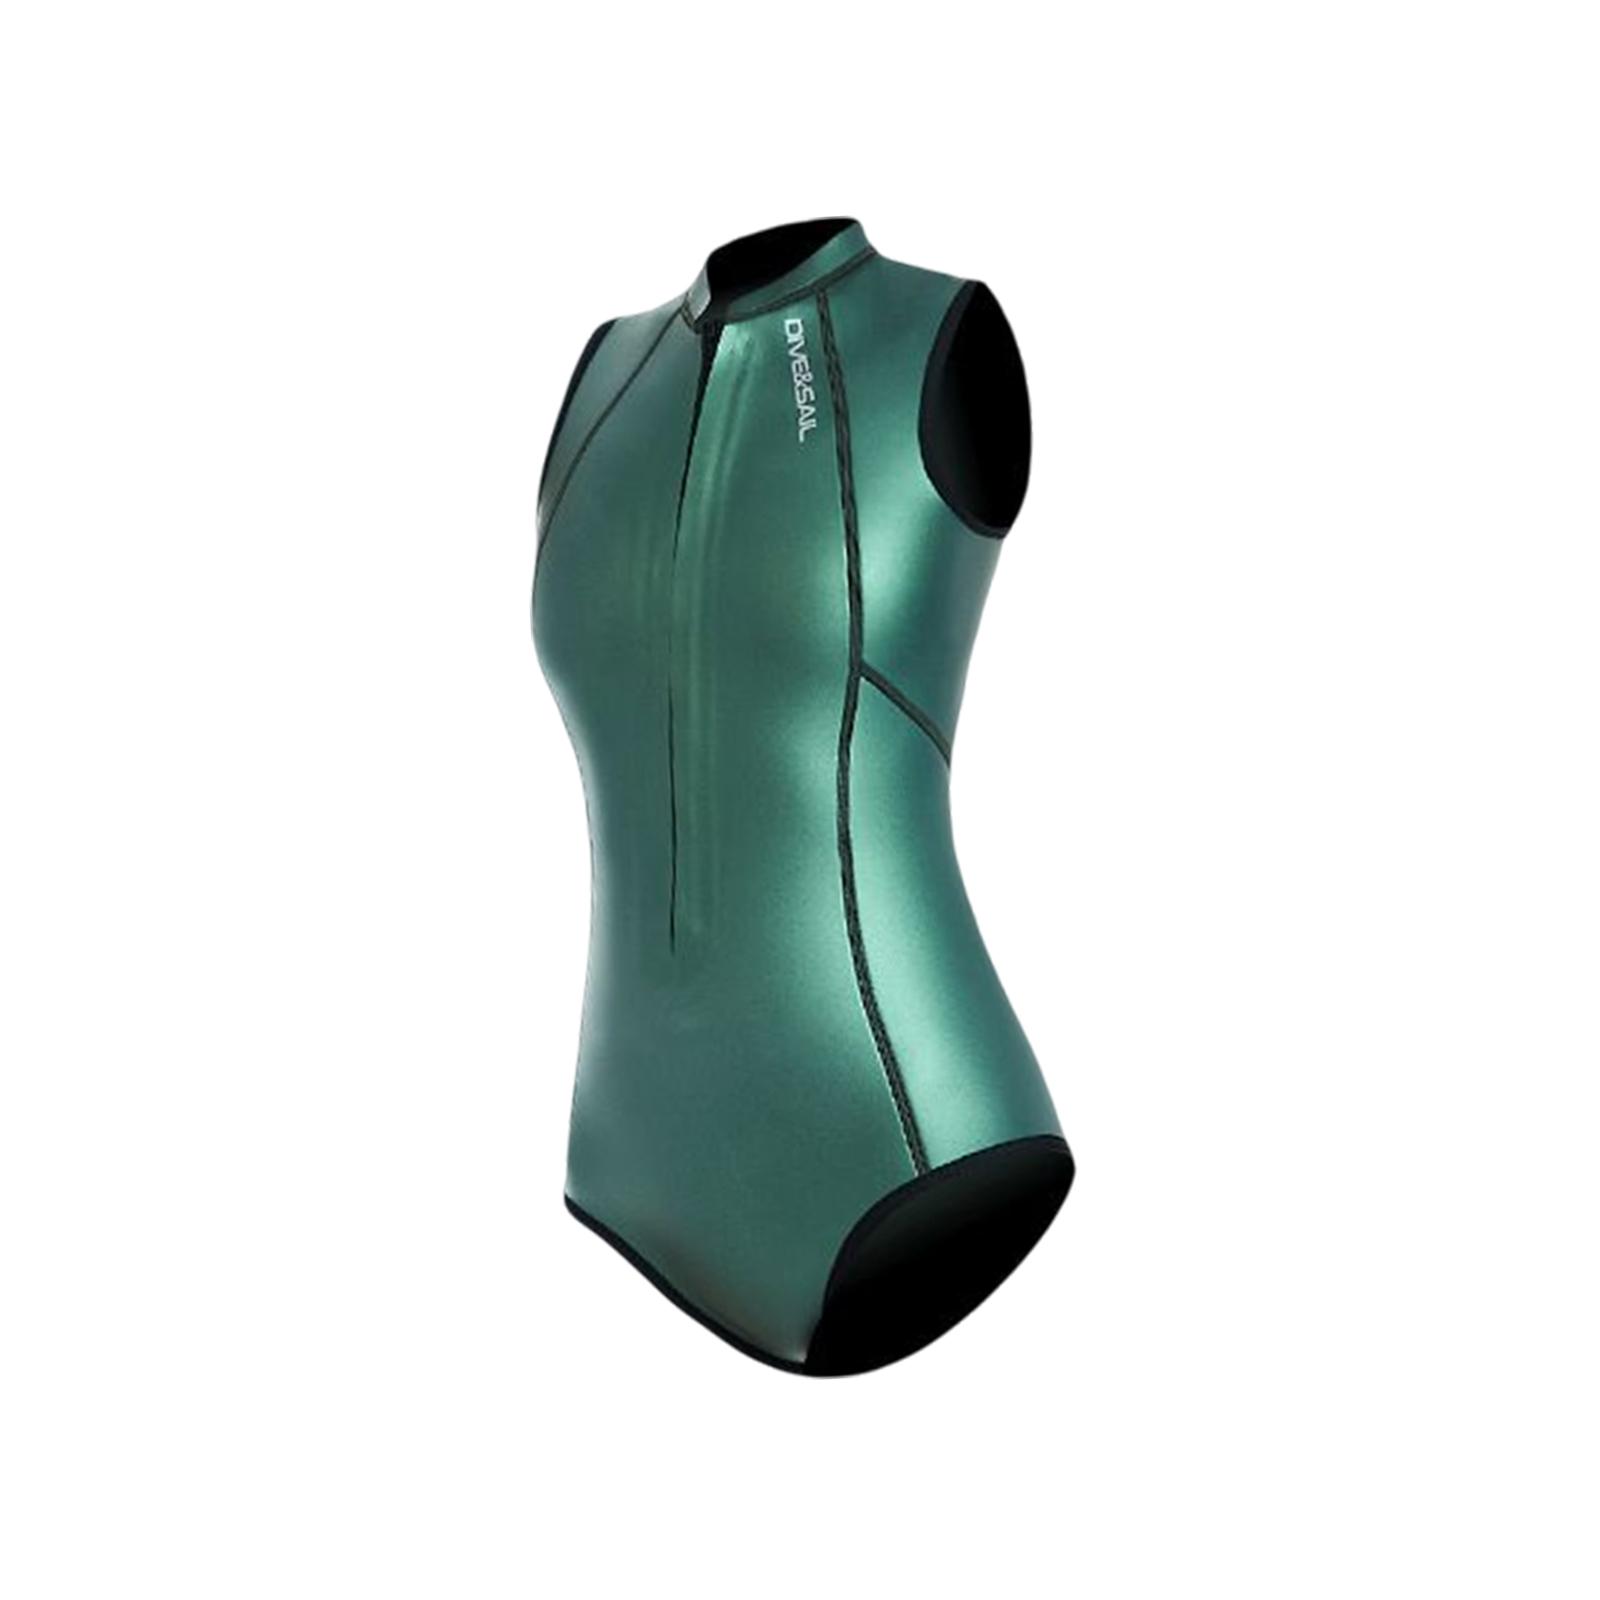 Scuba Diving Suit Women Lightweight Diving Swimwear Fashion for Snorkeling Green Color L